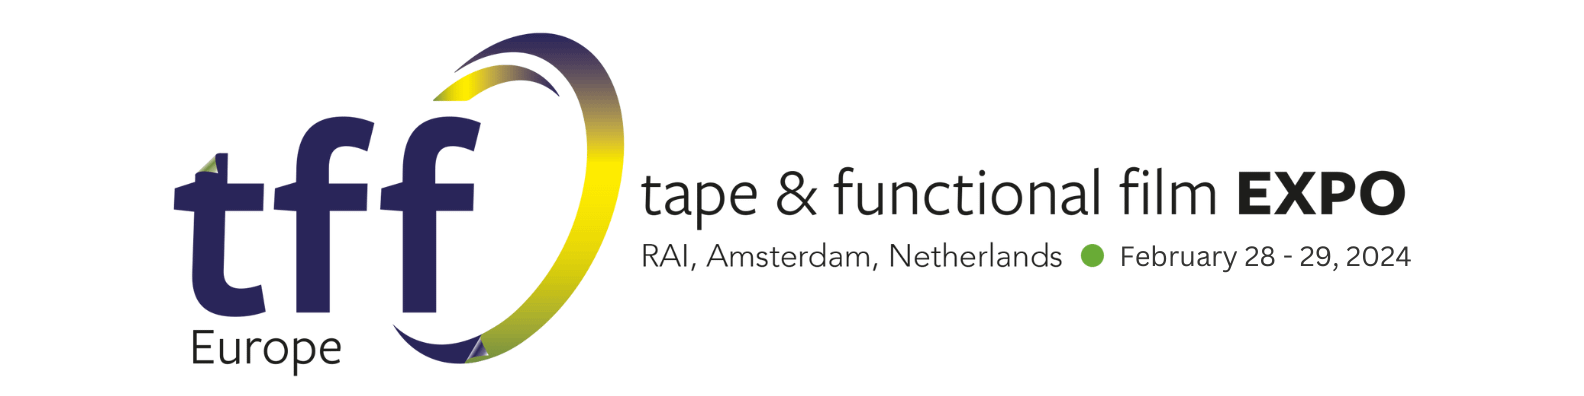 Tape & Functional Film Expo USA & Europe